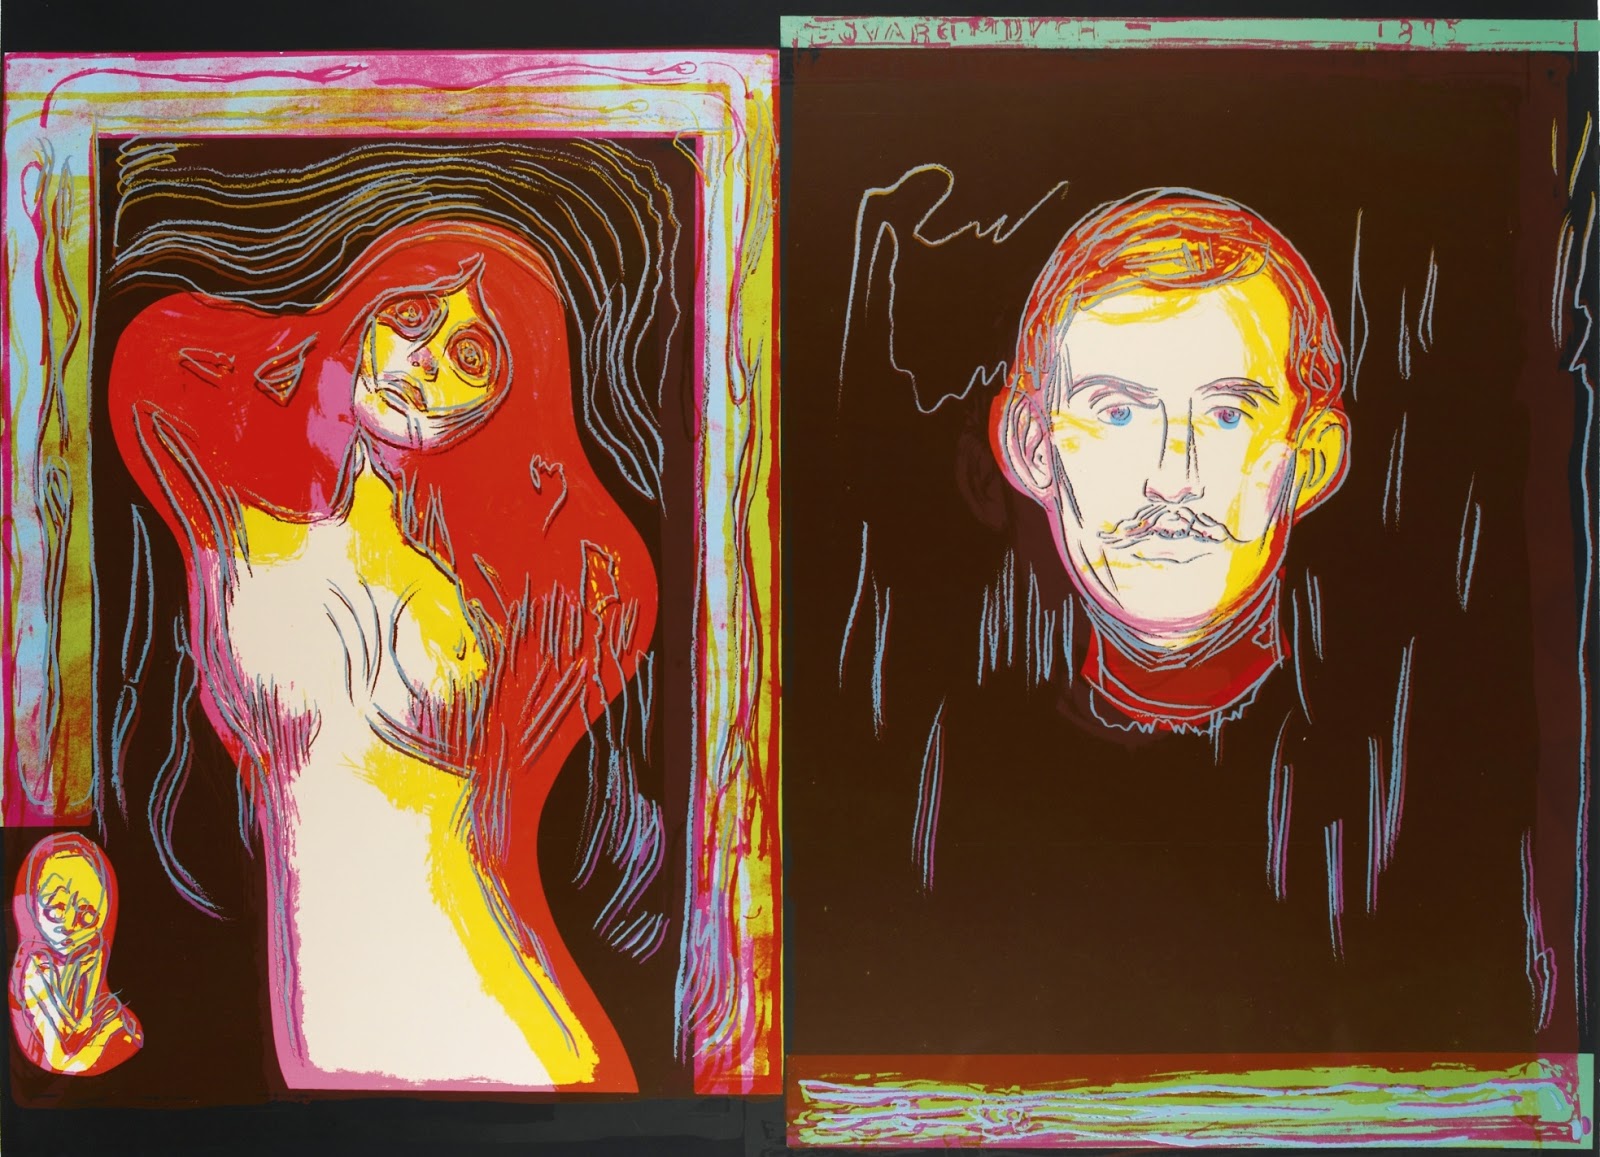 Andy+Warhol-1928-1987 (99).jpg